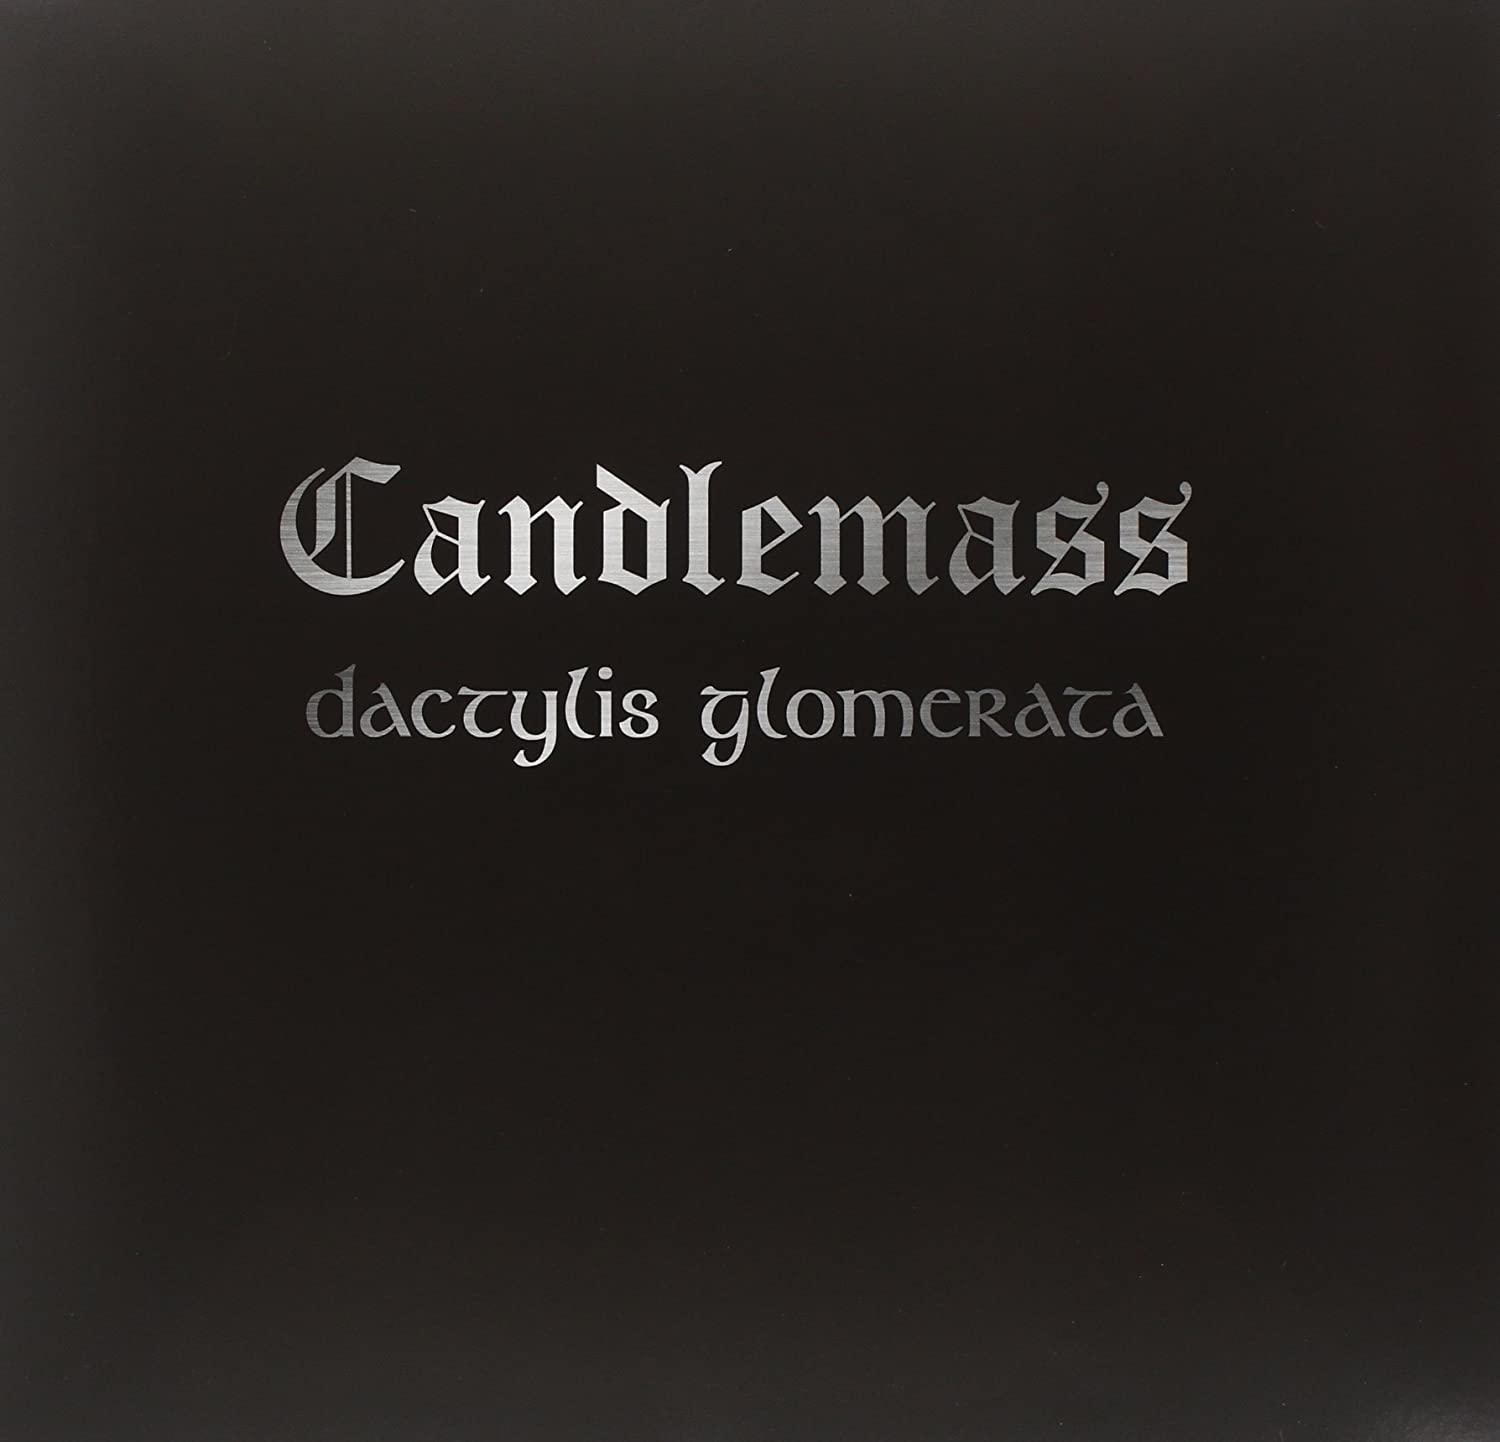 Candlemass "Dactylis Glomerata" Vinyl